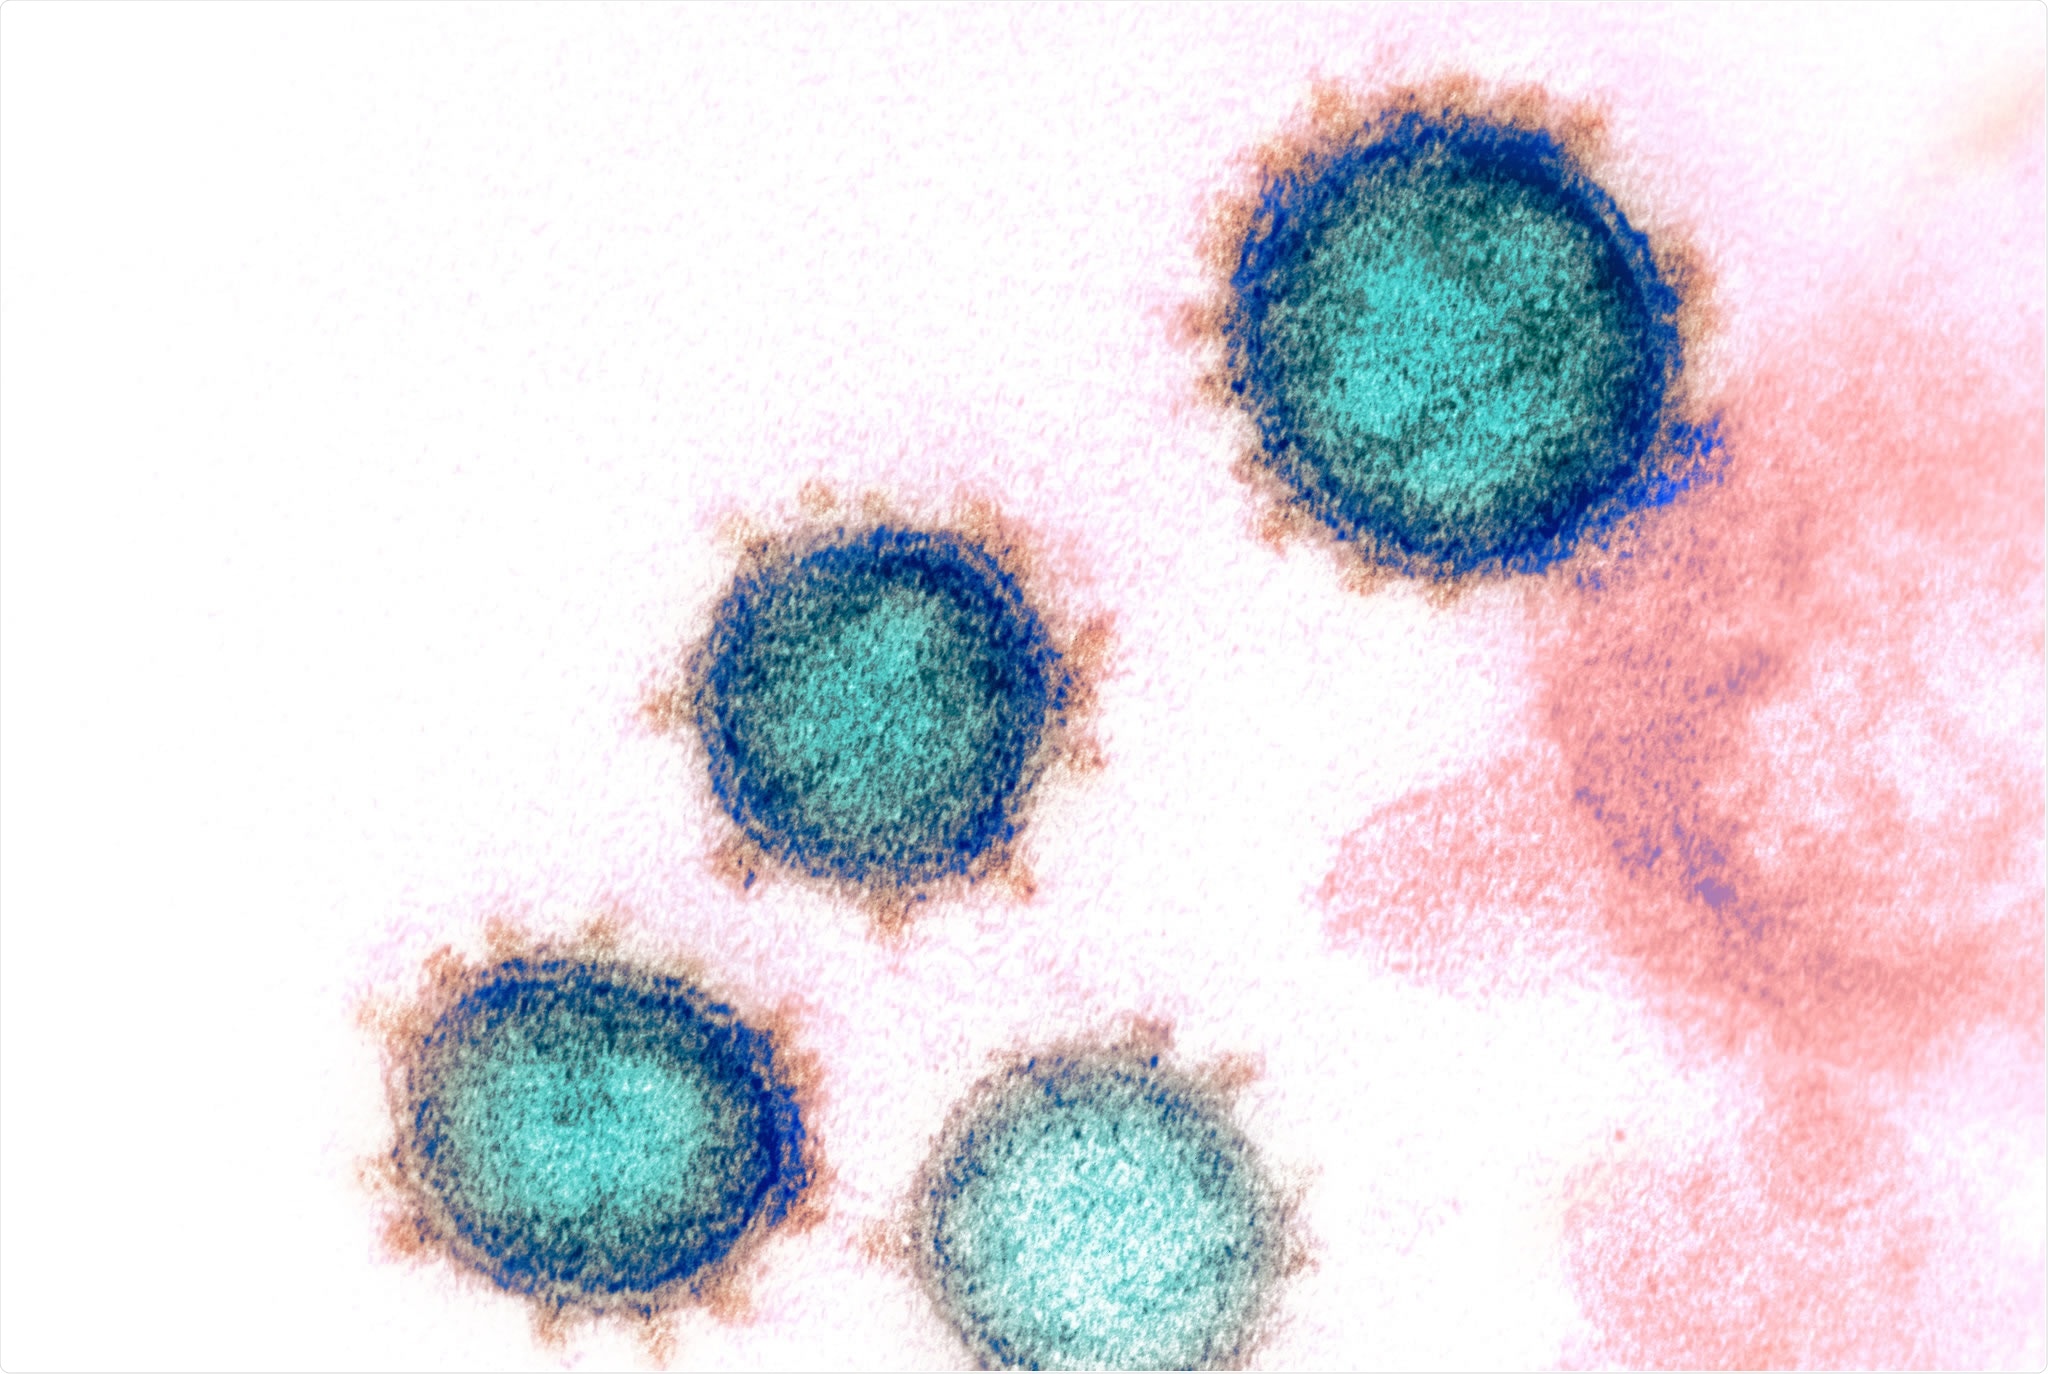 Characterization of laboratory-produced neutralizing antibodies targeting SARS-CoV-2